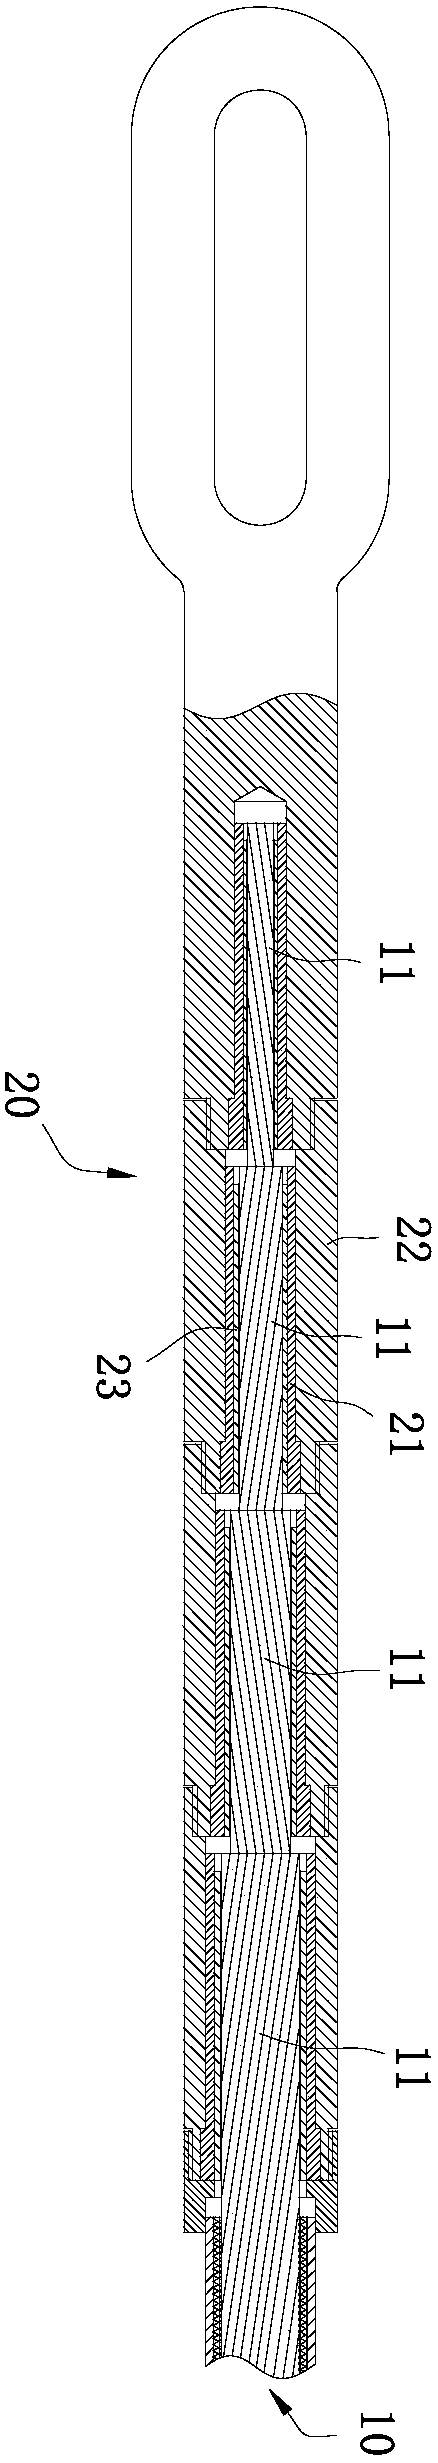 A carbon fiber cable anchorage anchorage connection structure